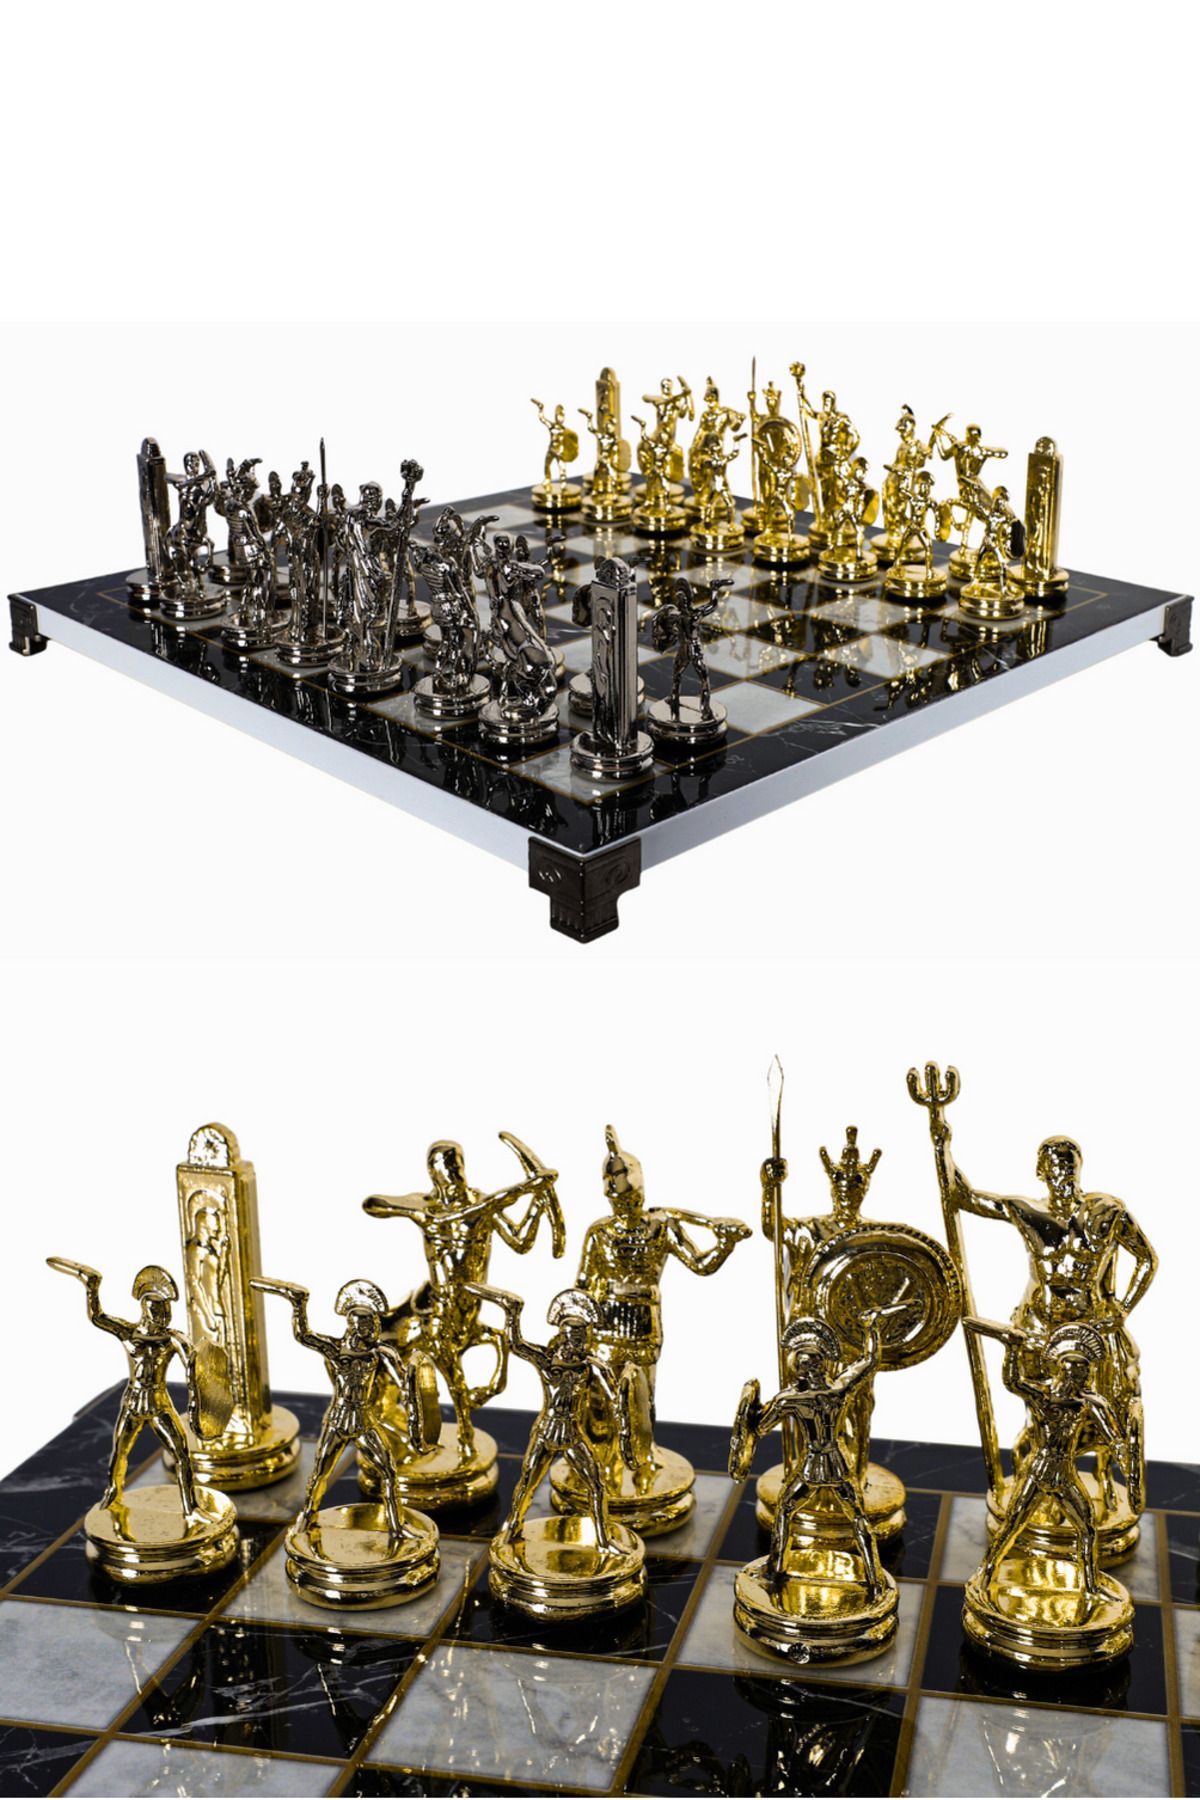 Cooper Chess Büyük Metal Satranç Takımı | 37cm Mermer Desenli Satranç Tahtası | Yunan Mitolojik Poseidon Figürlü